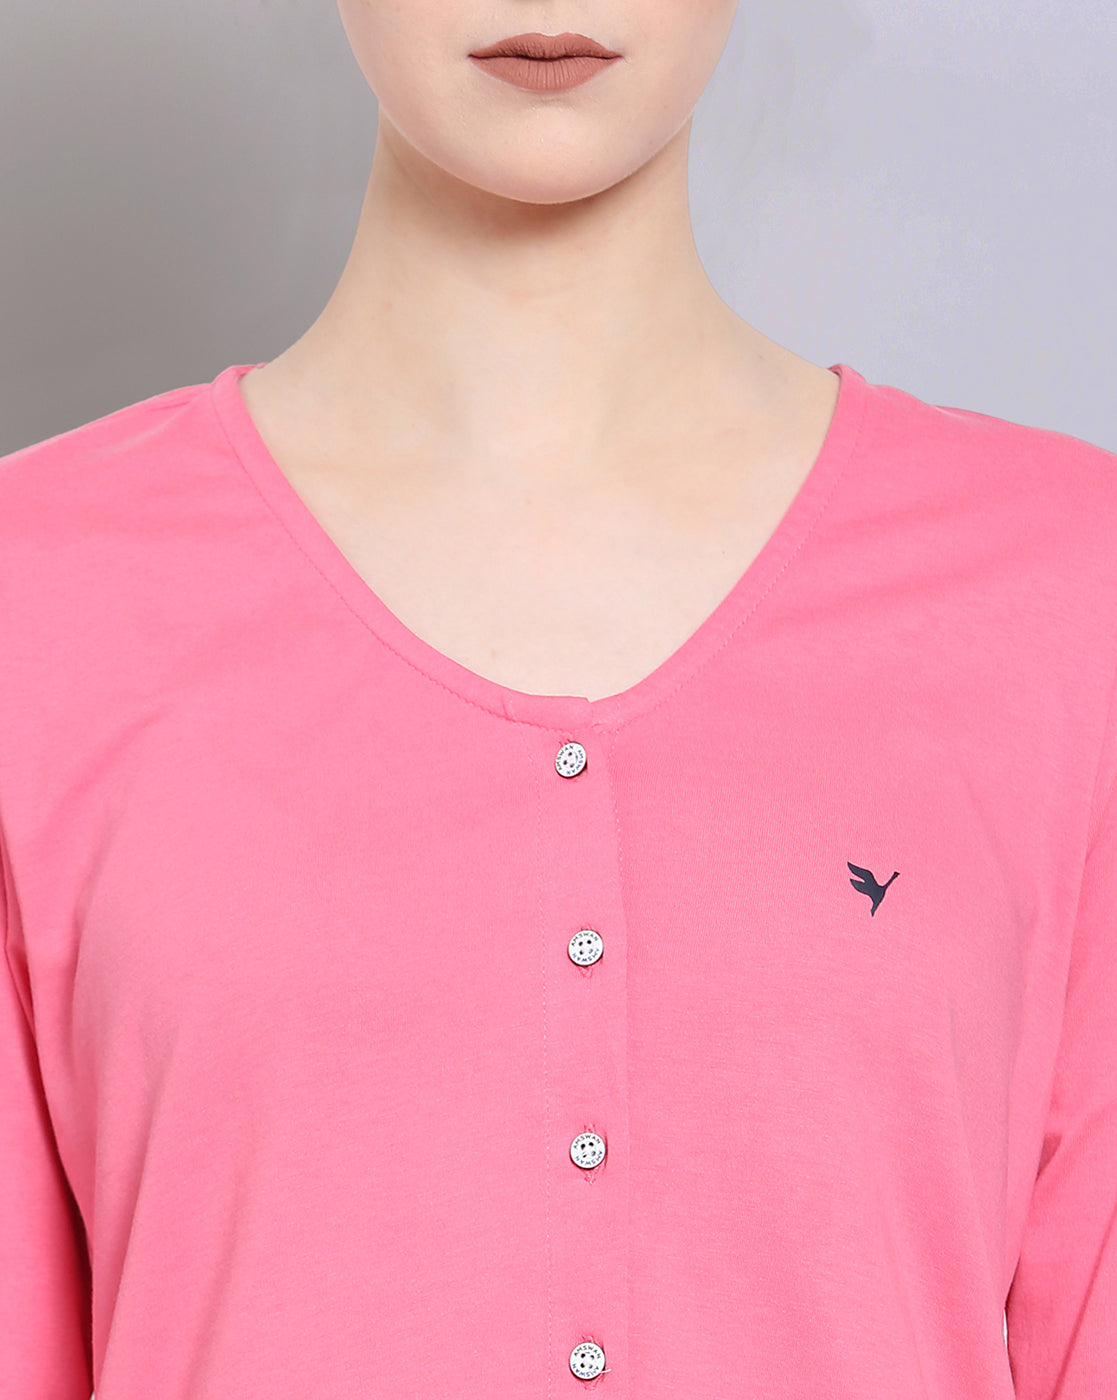 Women's Premium Cotton 3/4 Sleeve V- neck Tops